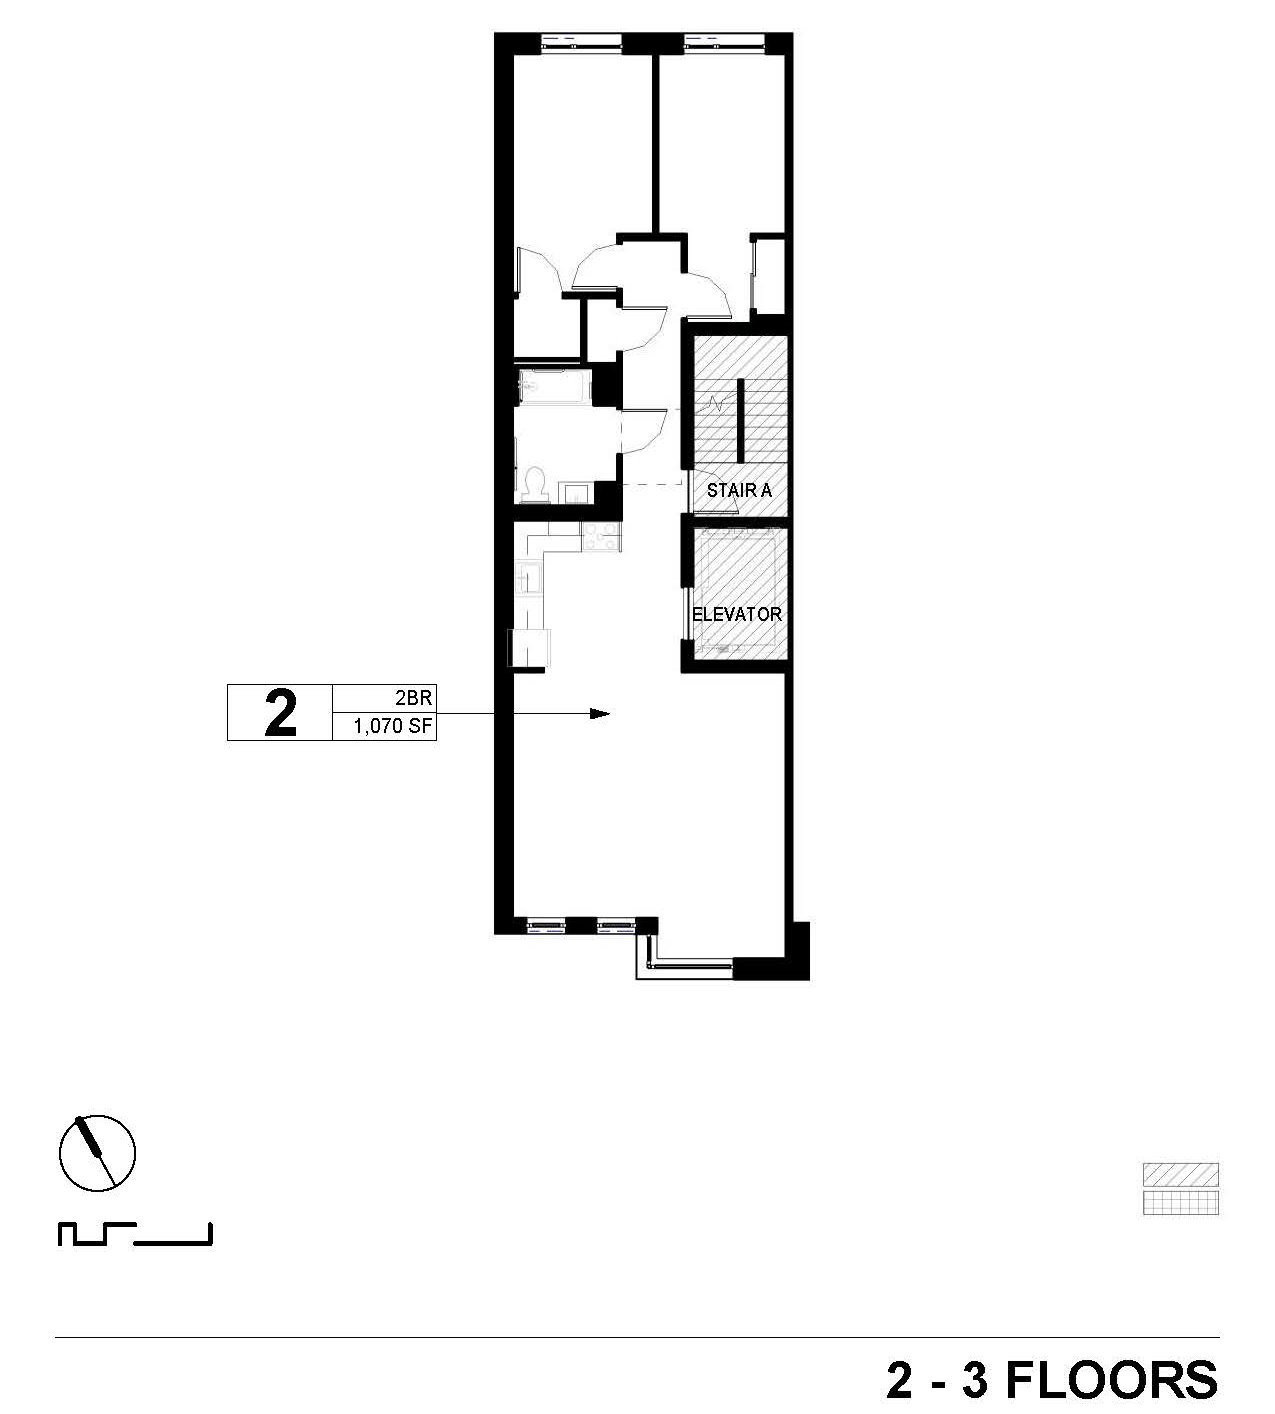 foorplan of typical floor showing two bedroom apt